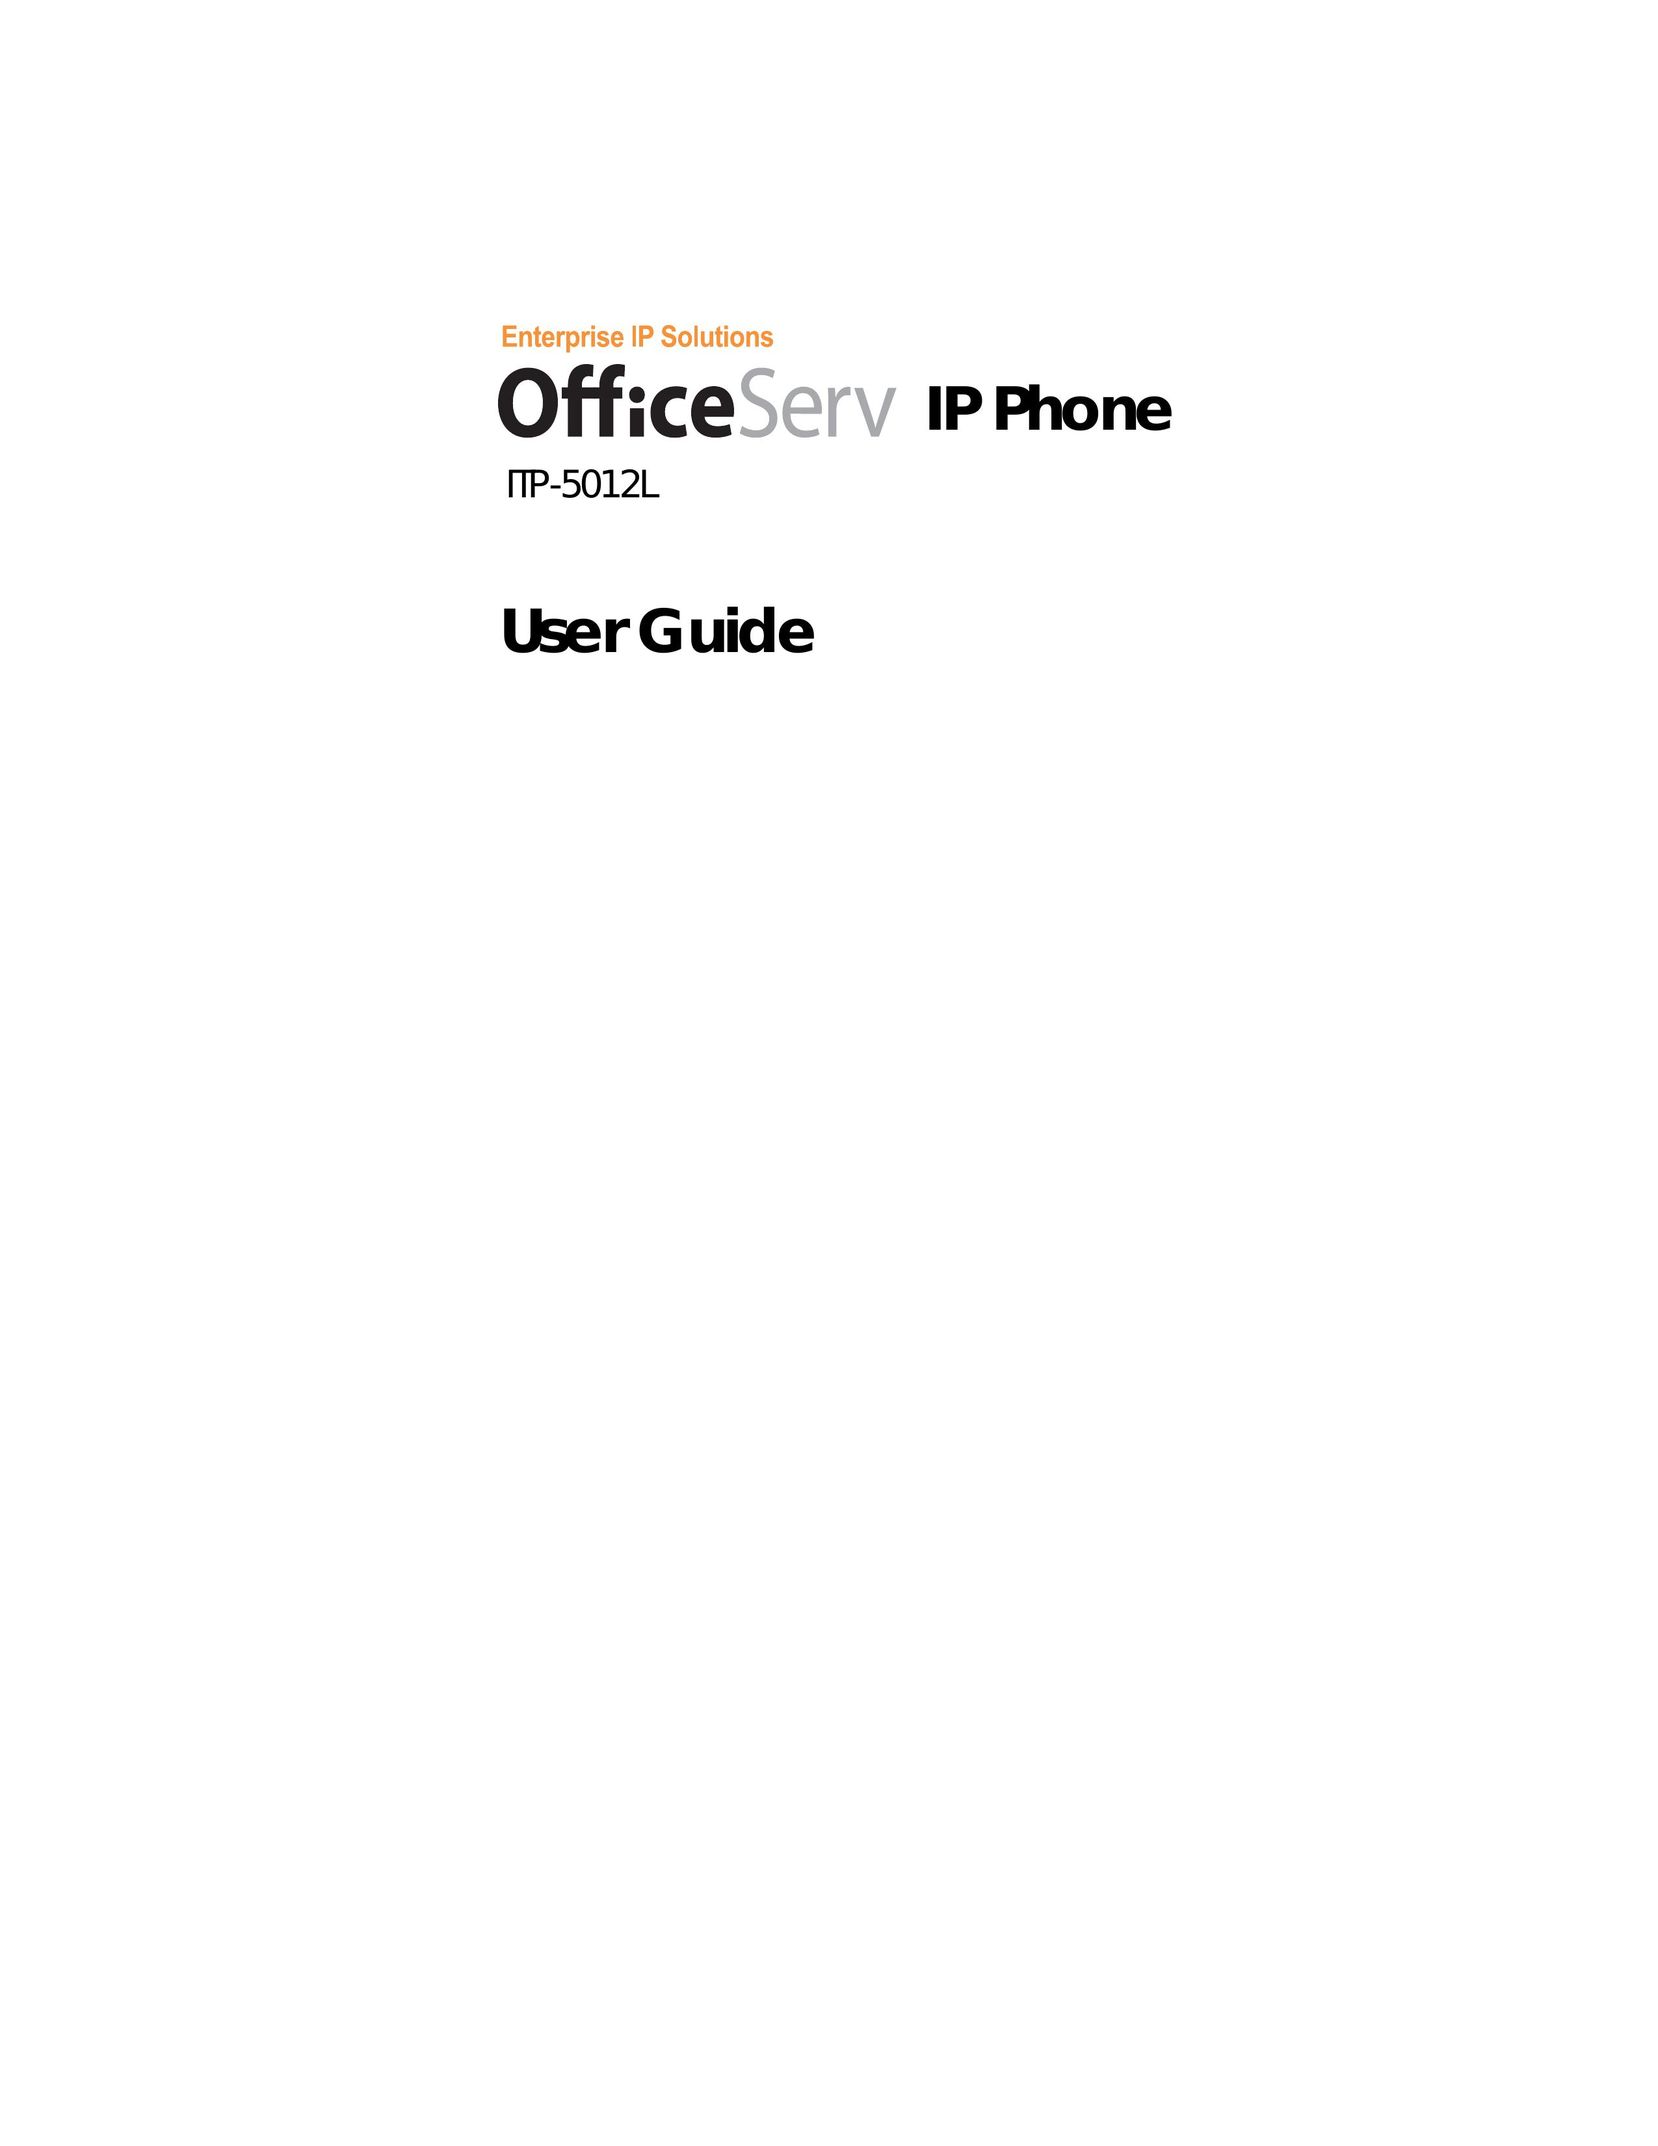 Samsung ITP-5012L Telephone User Manual